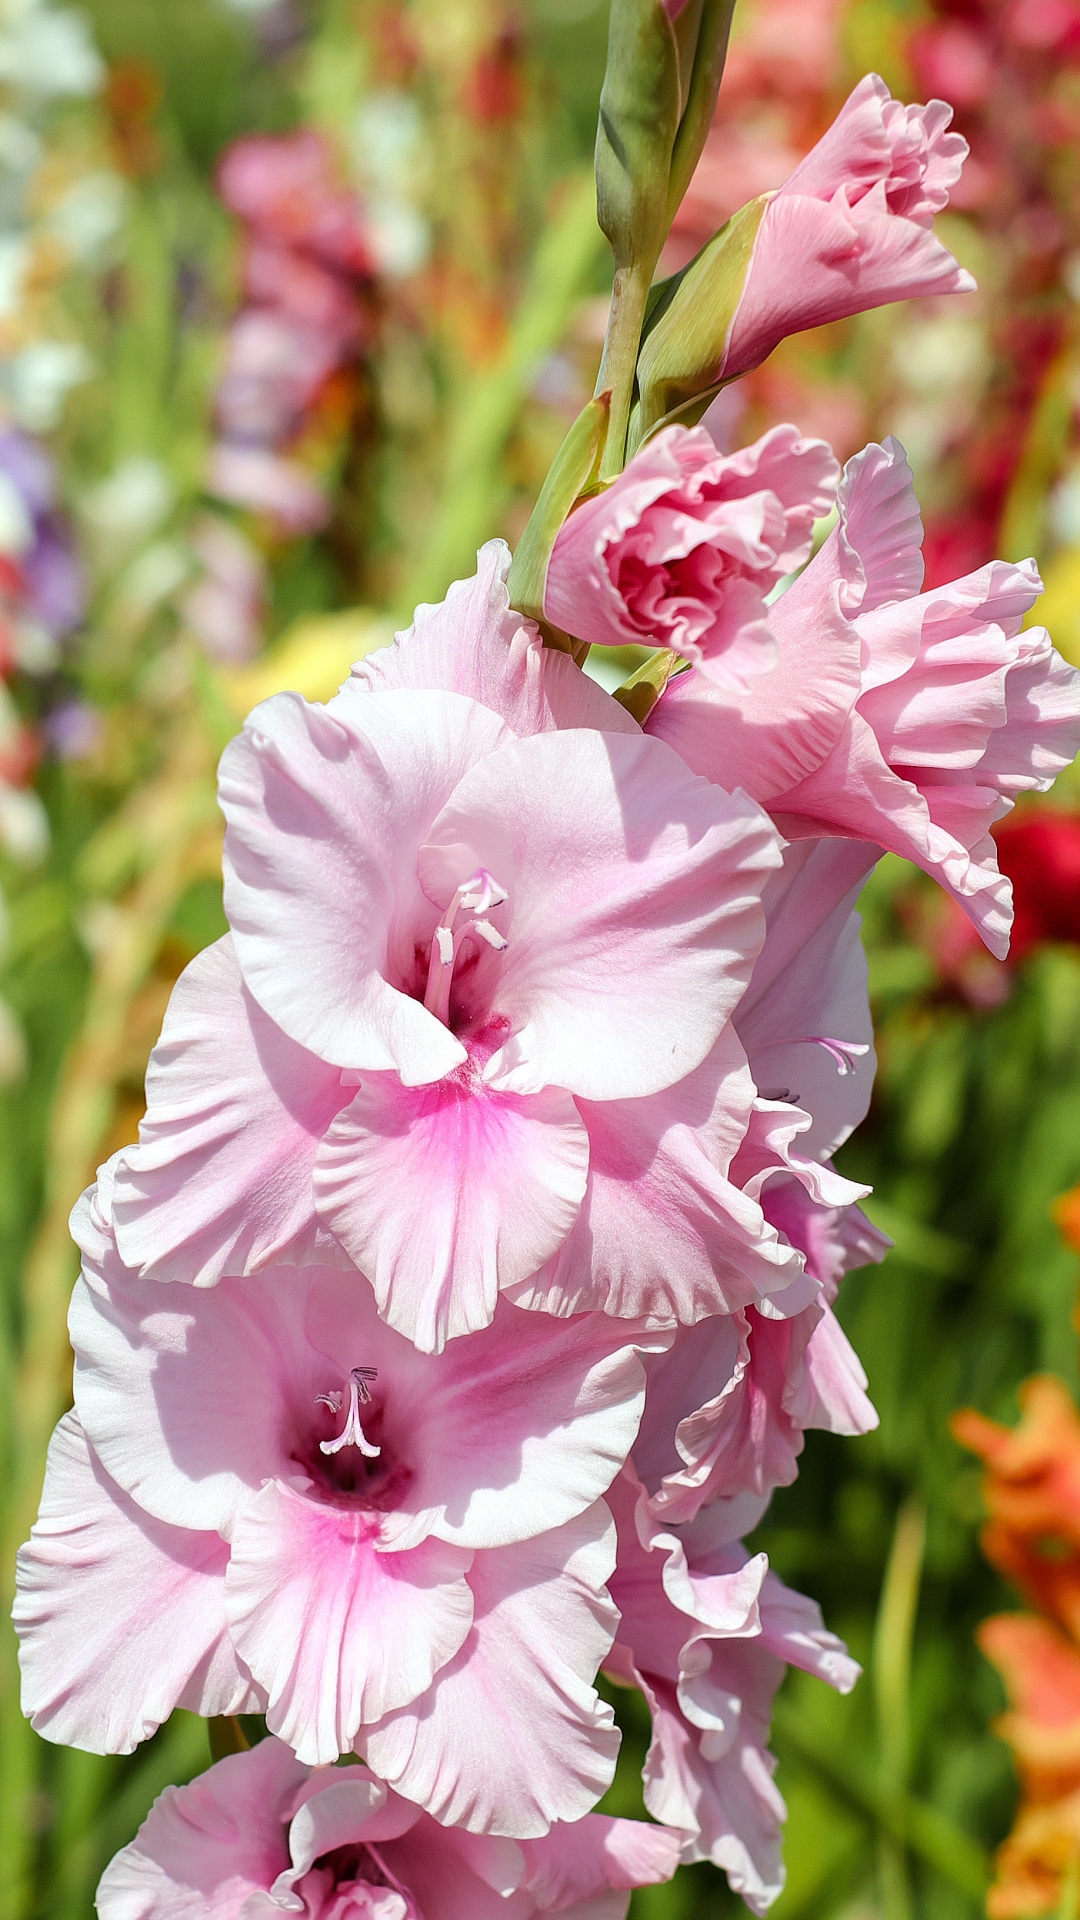 gladiolus, earth, nature, flower, pink flower, flowers